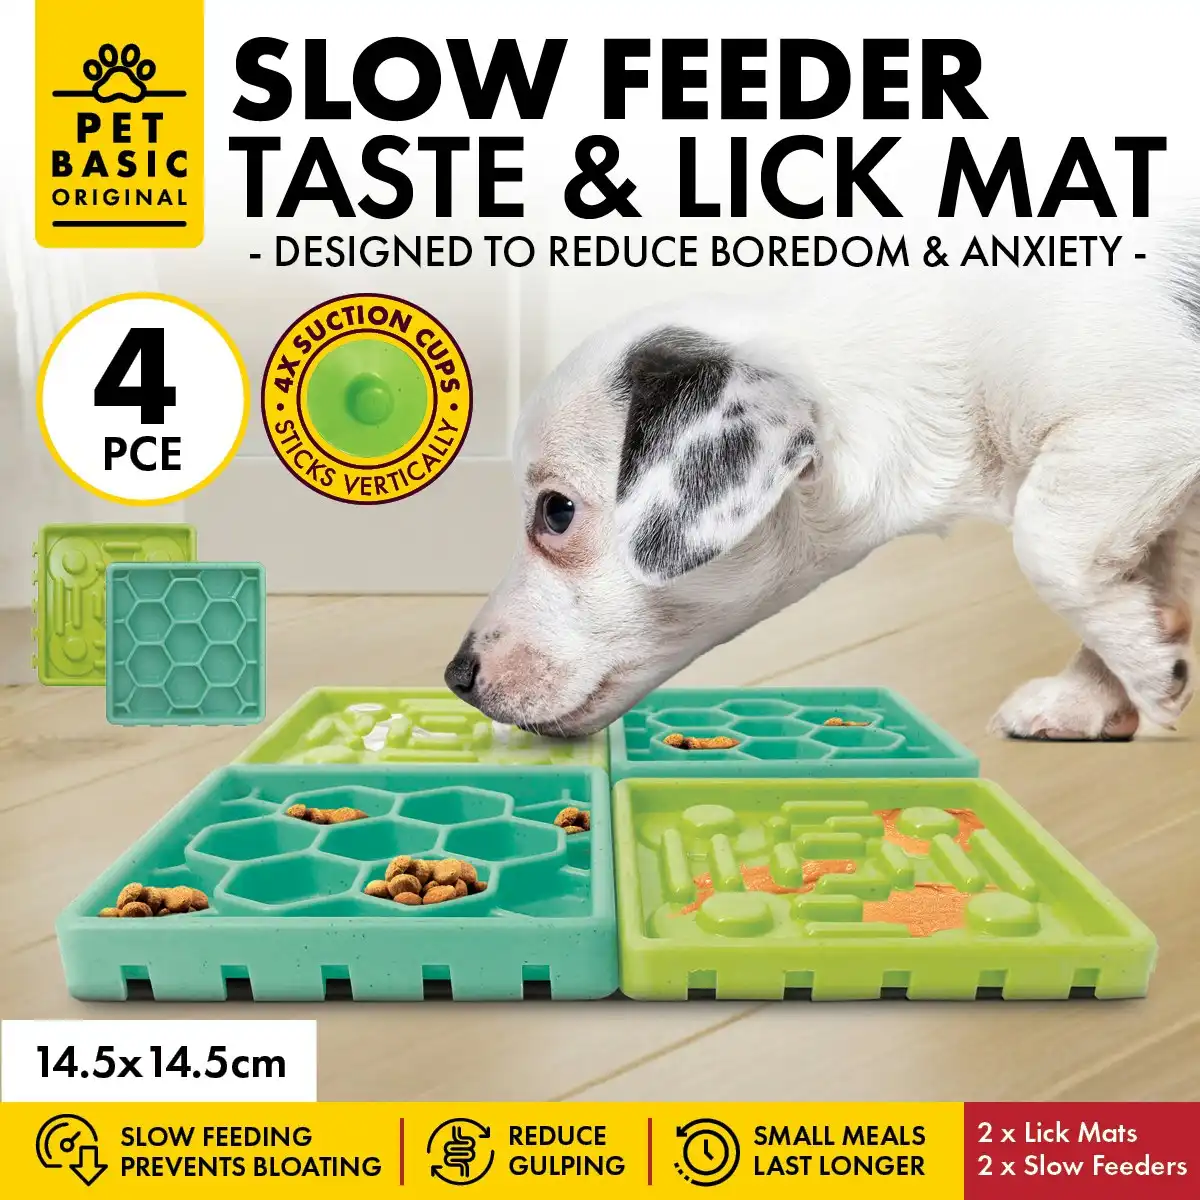 Pet Basic 4PCE Taste & Lick Square Shaped Slow Feeder Suction Mats 14.5cm